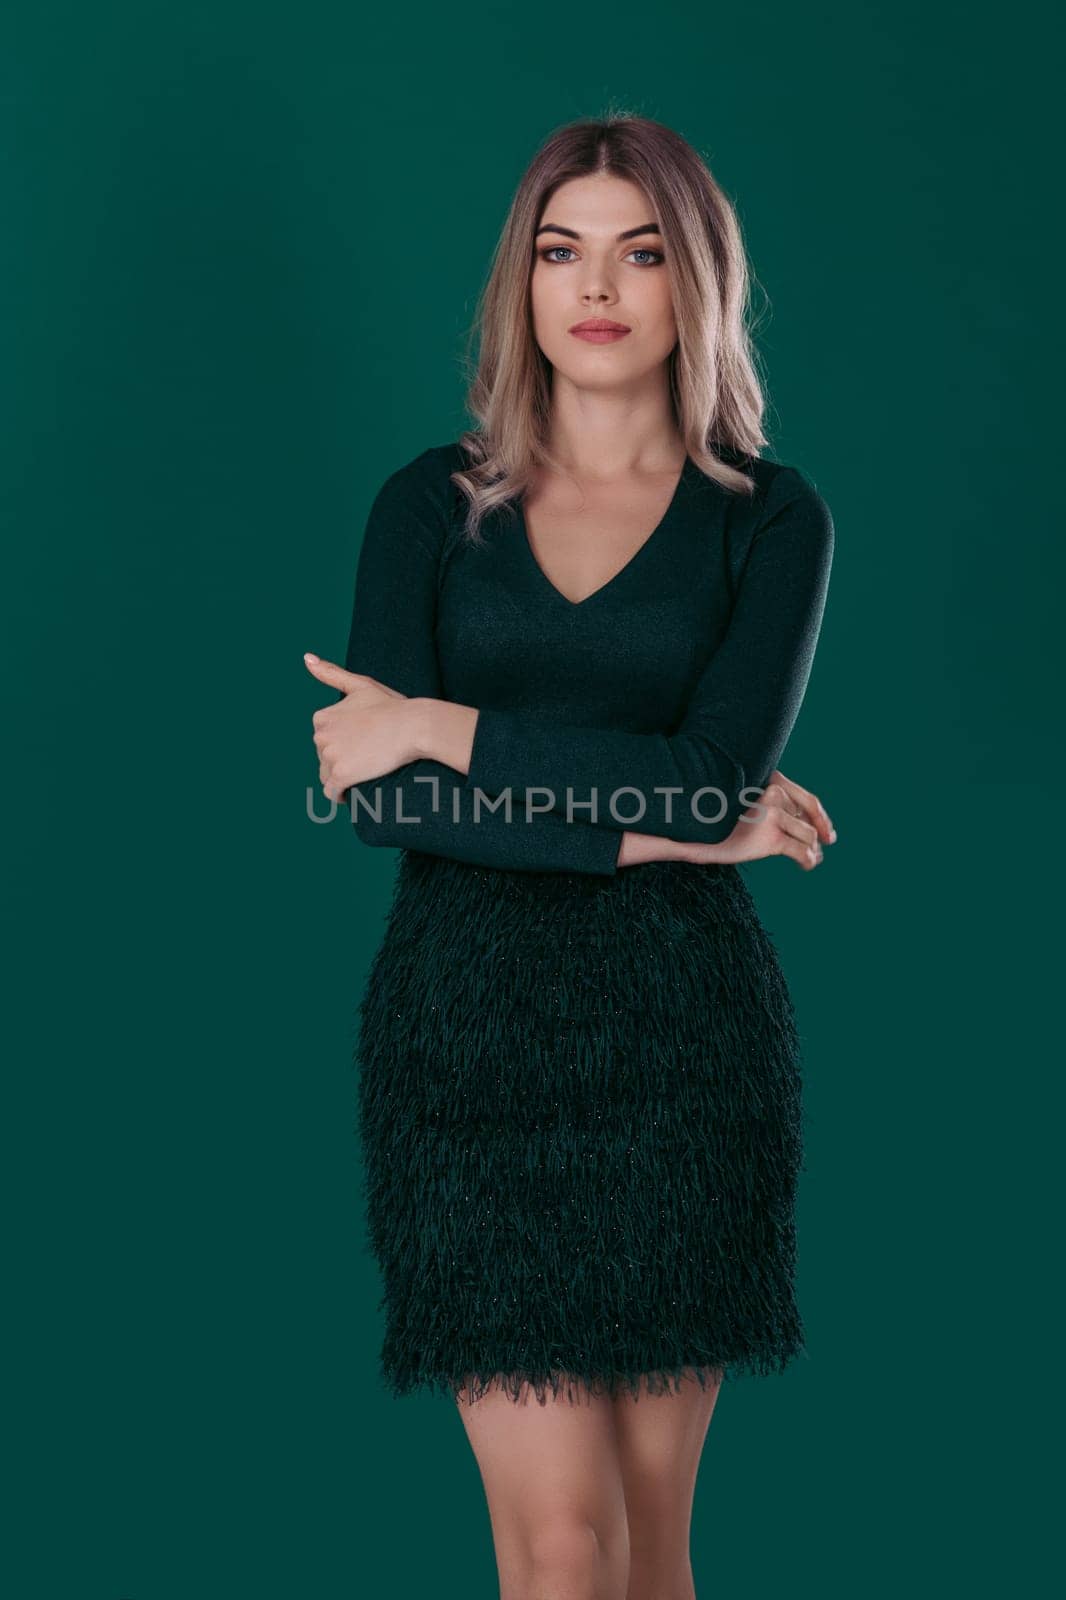 calm beautiful blonde woman posing in green dress on green background